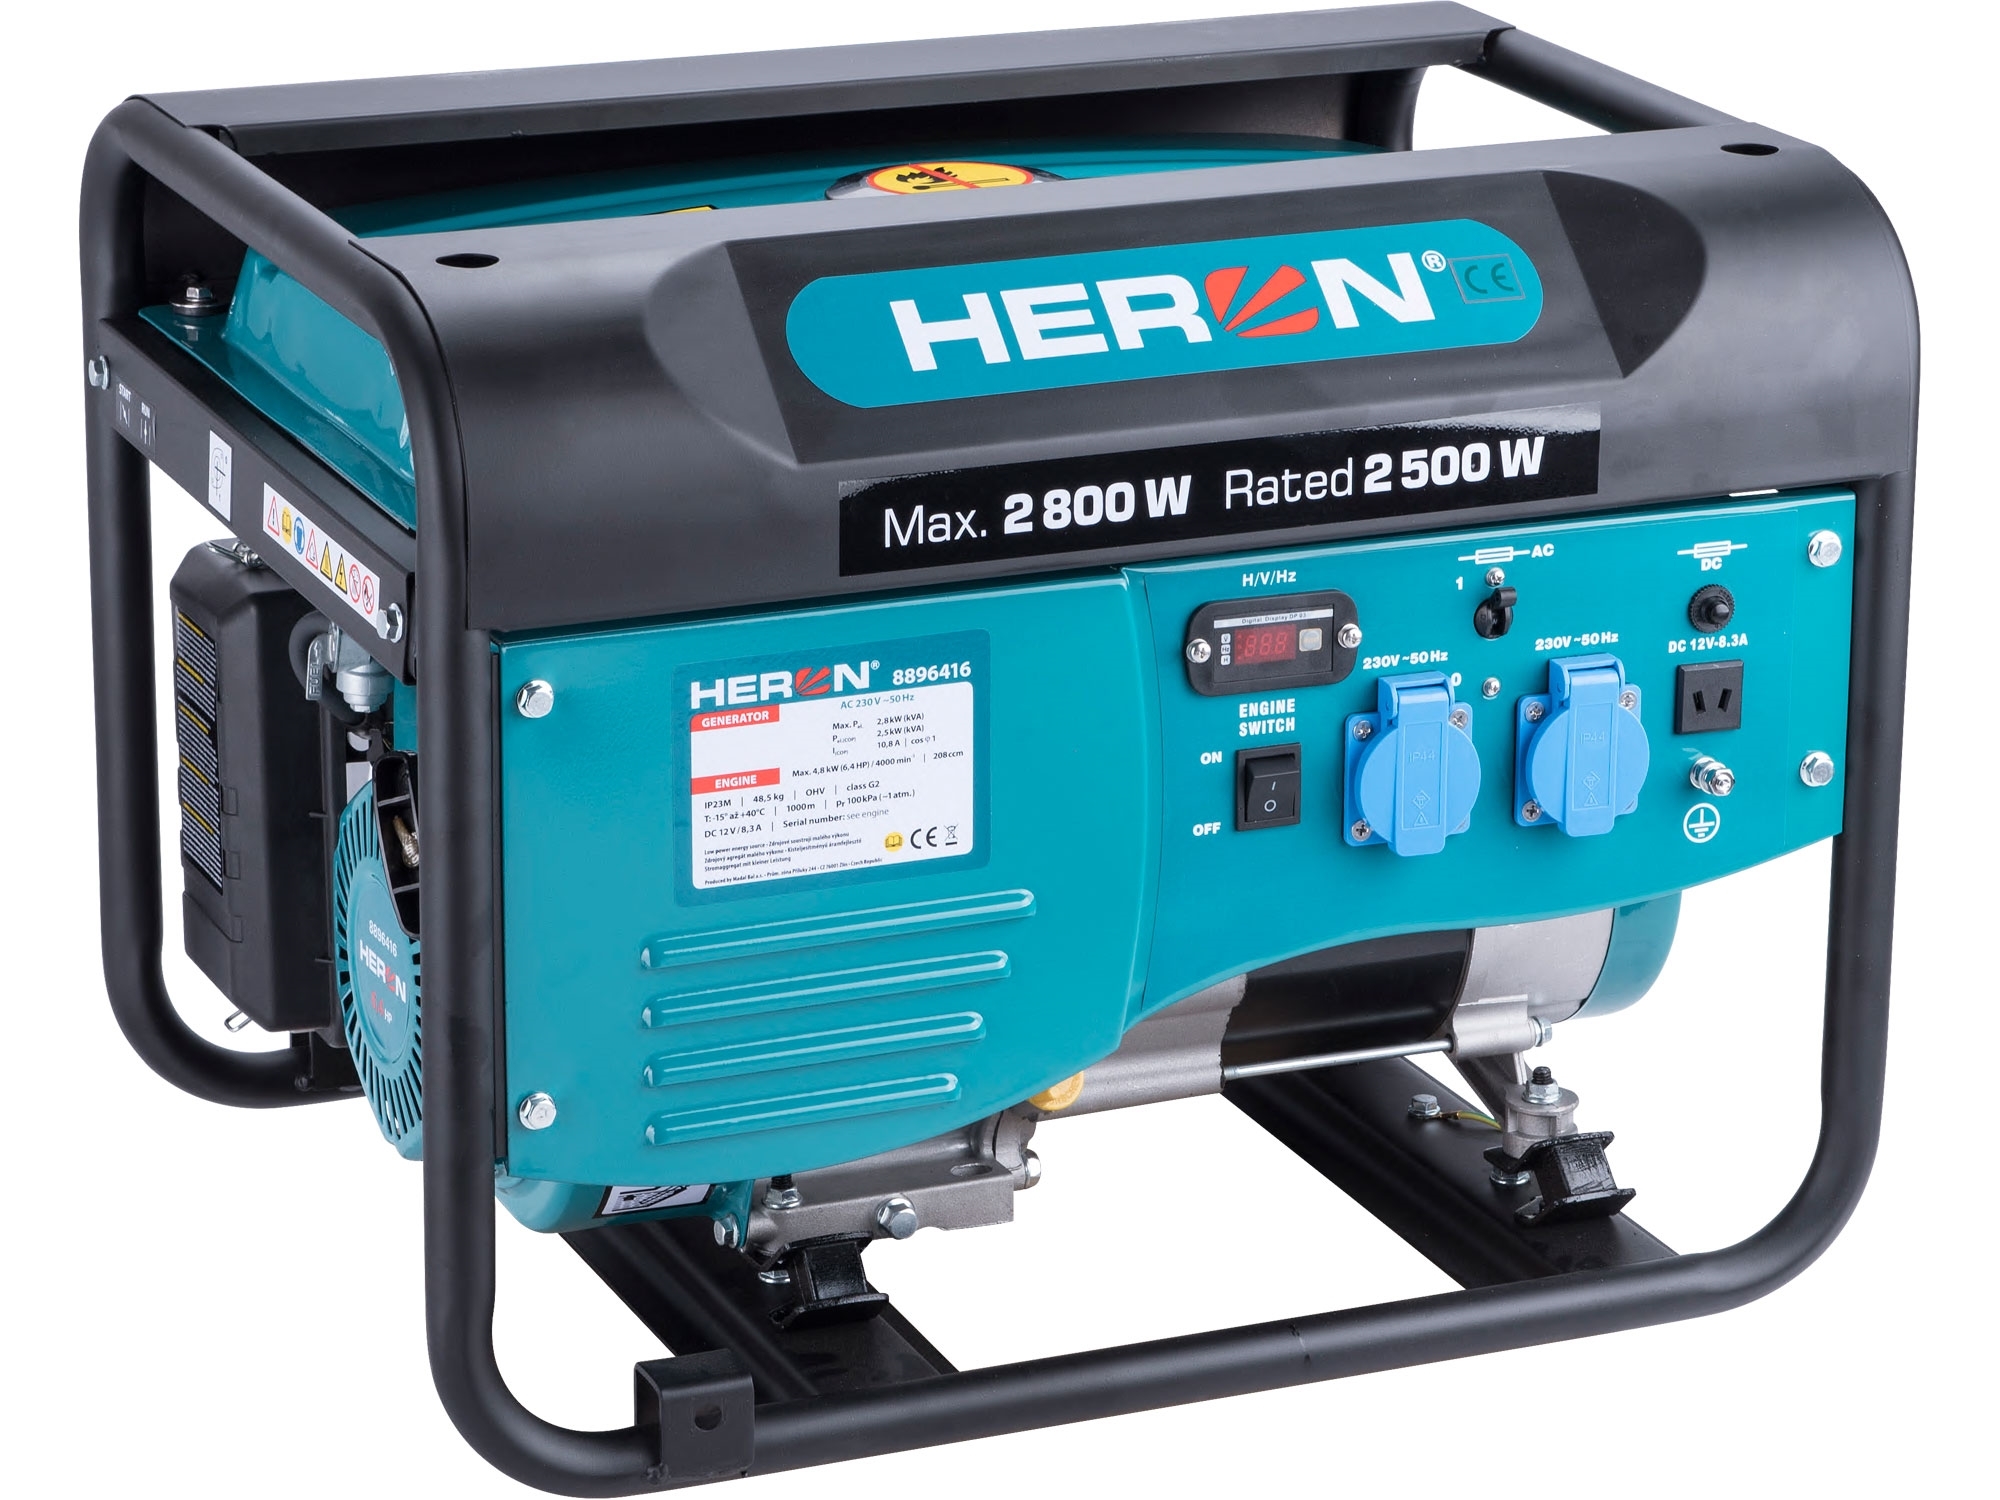 Benzínová elektrocentrála HERON (8896416)